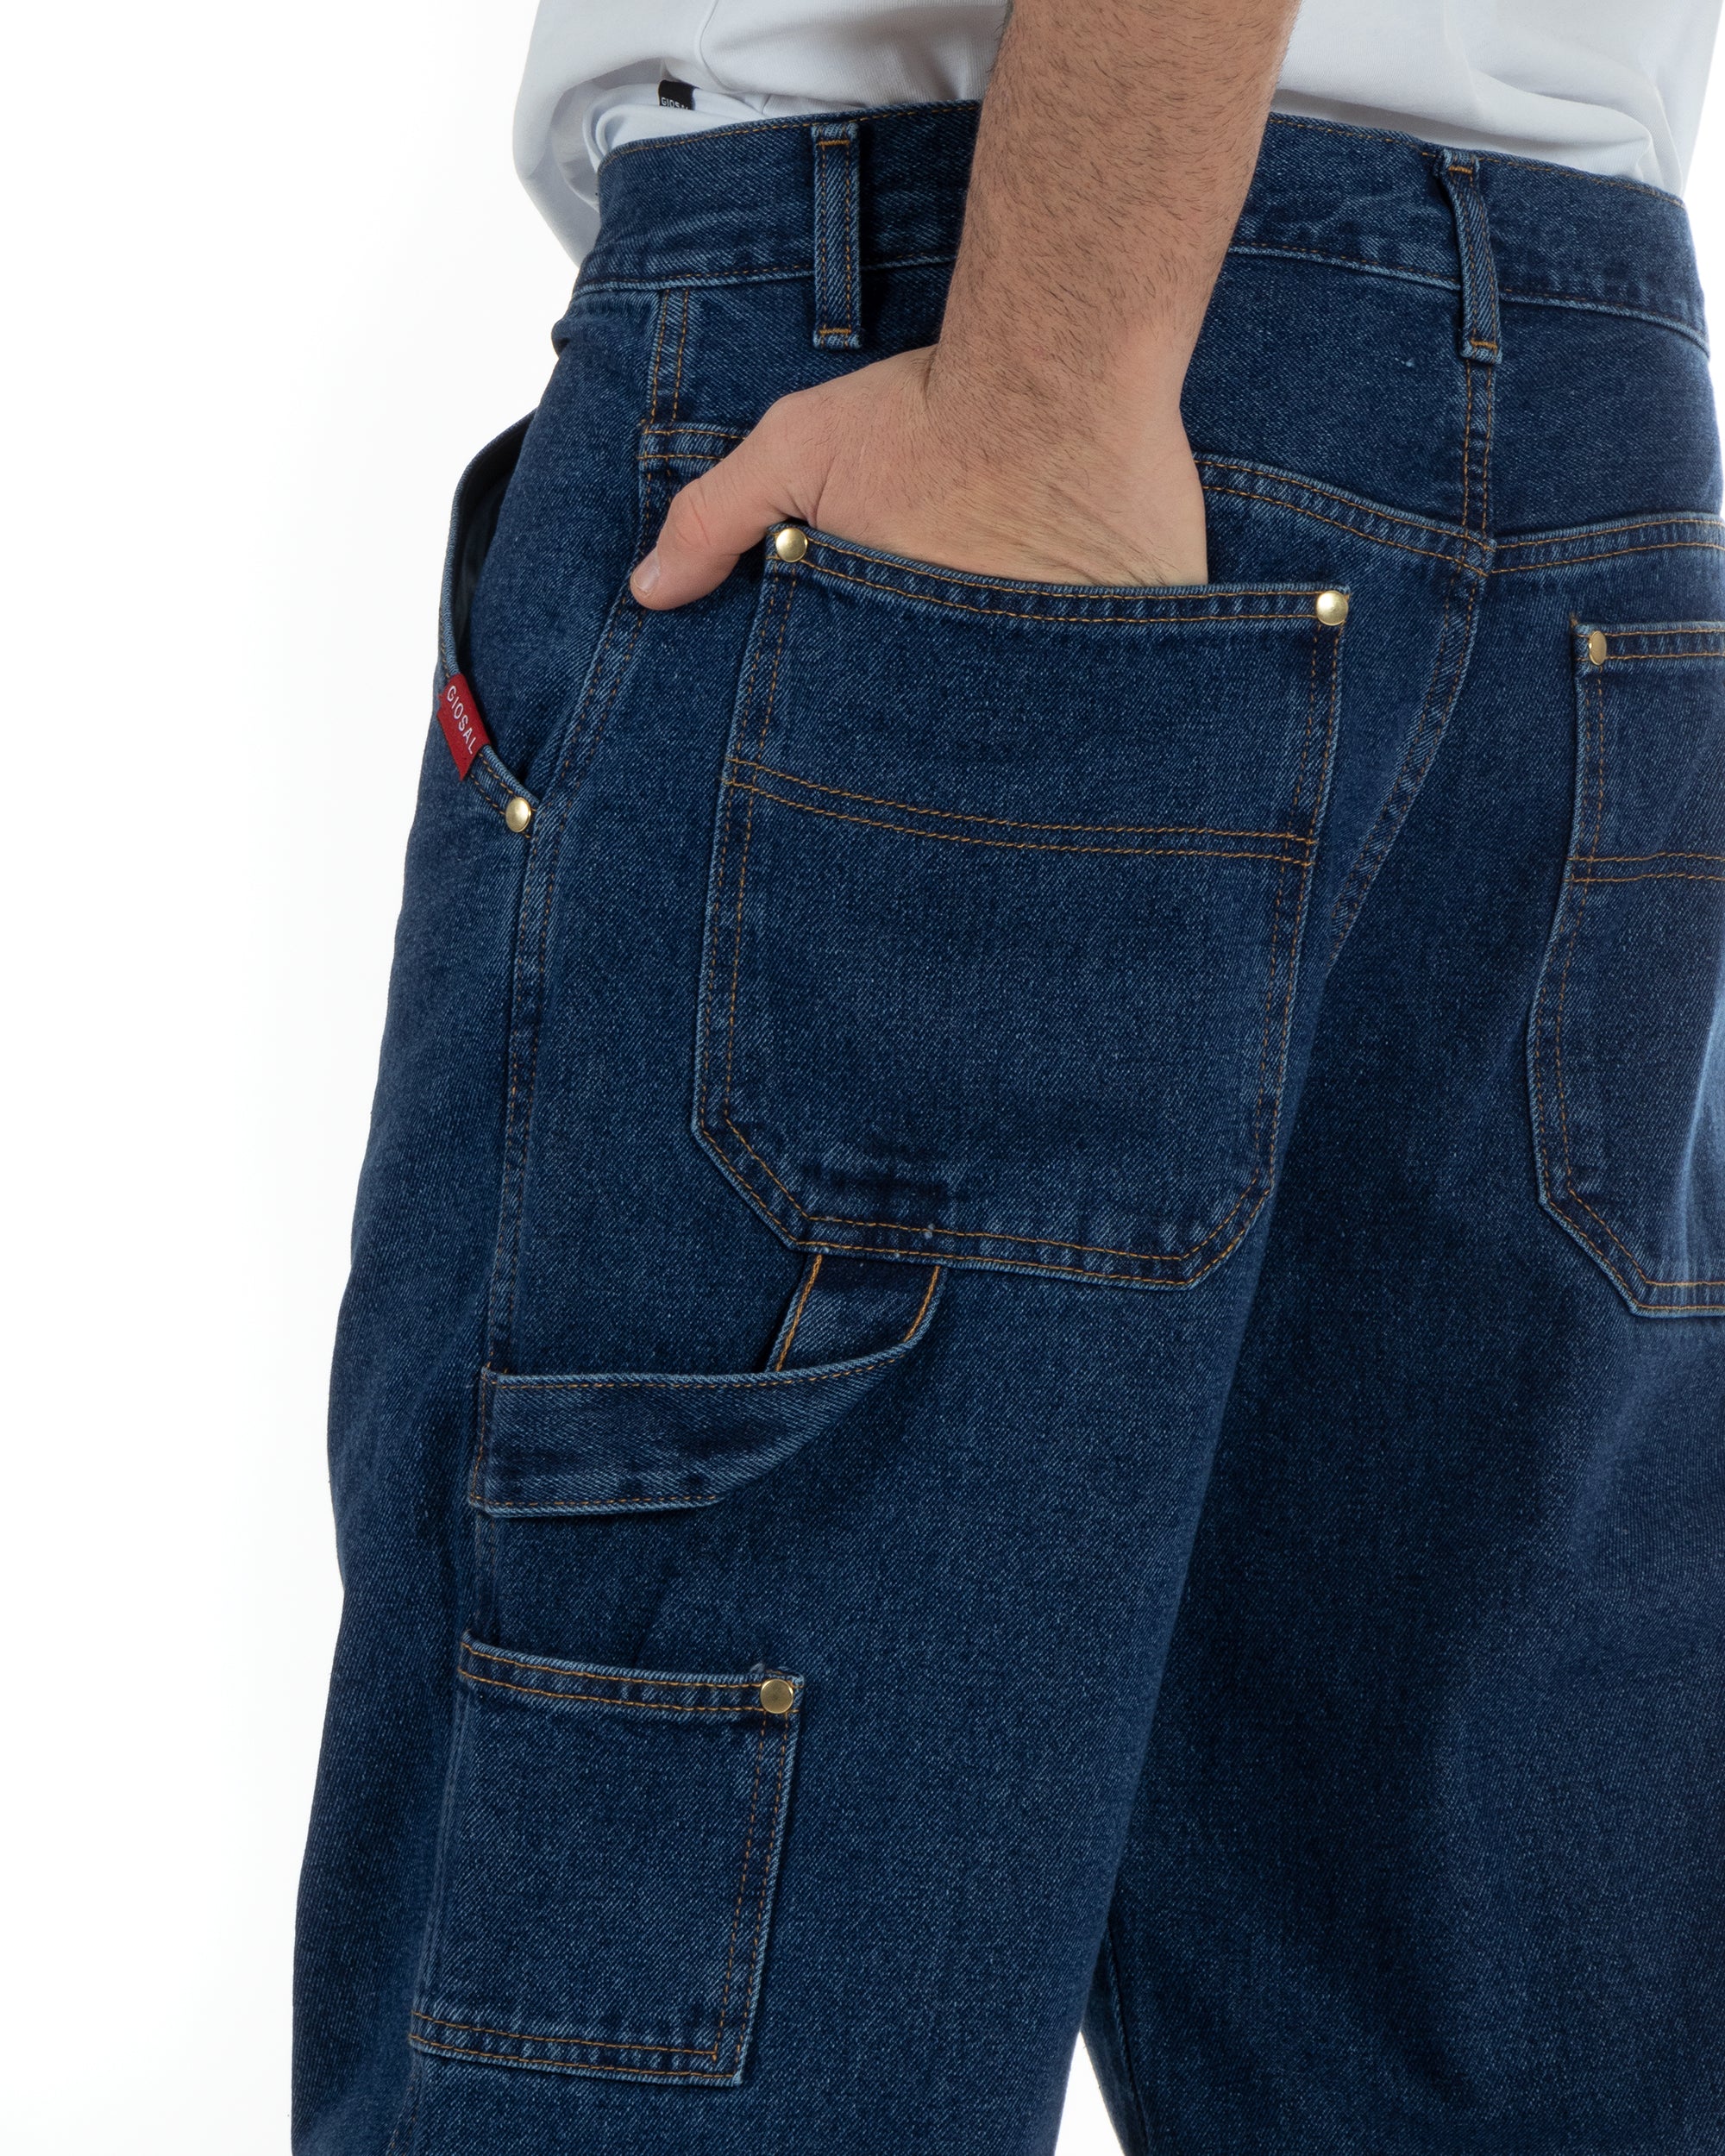 Pantaloni Jeans Uomo Baggy Fit Carpenter Worker Cargo Denim Scuro GIOSAL-P5988A